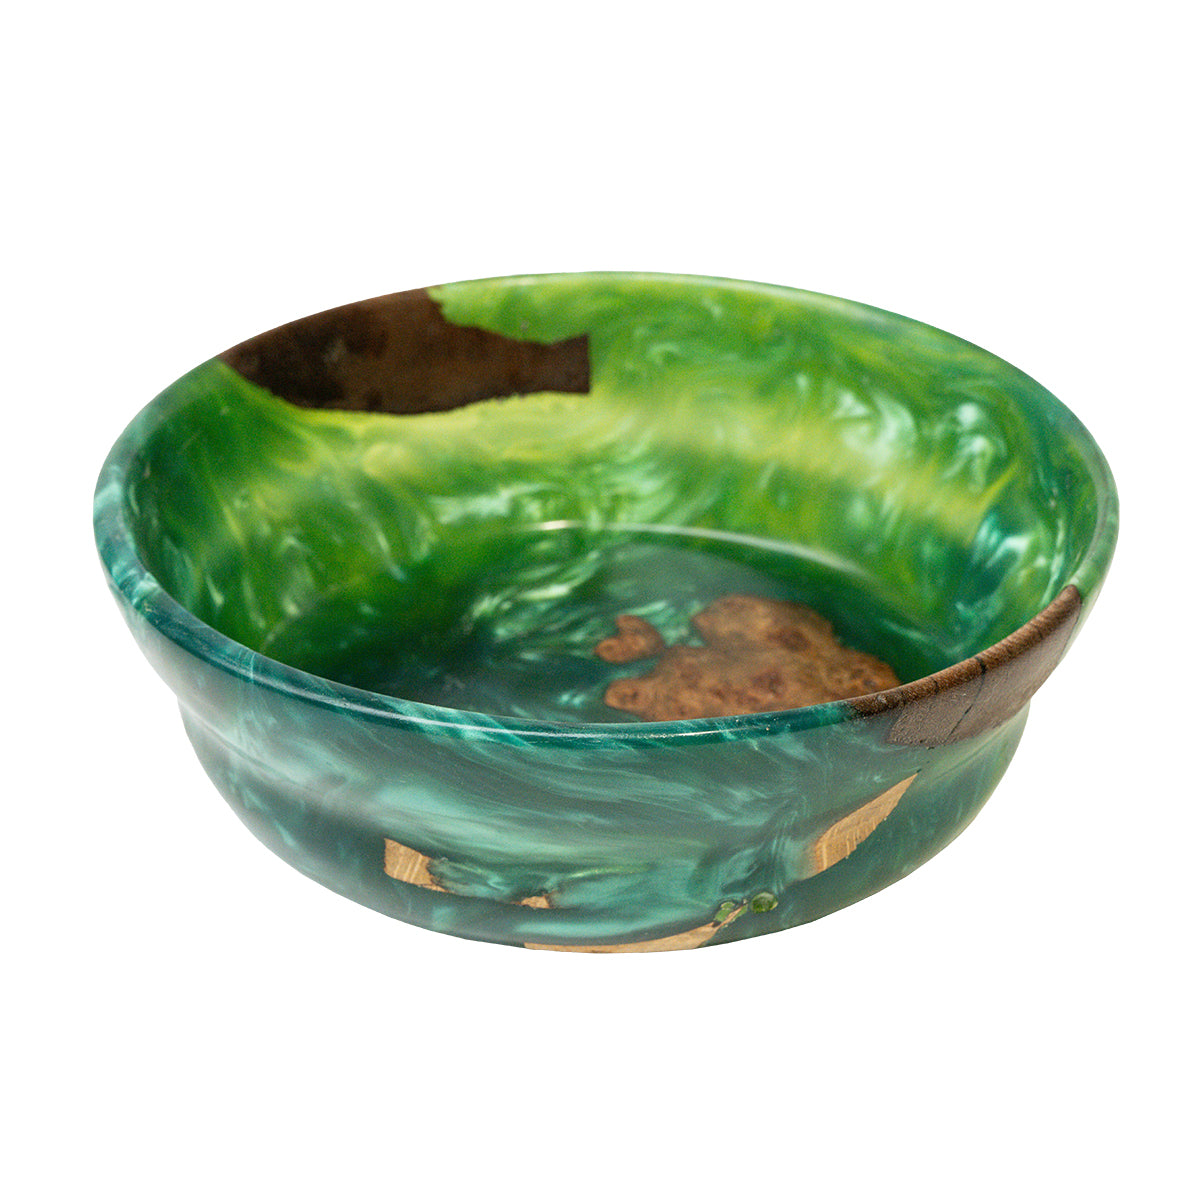 Laz Studio Live edge bowl in green resin and Scottish Elm     